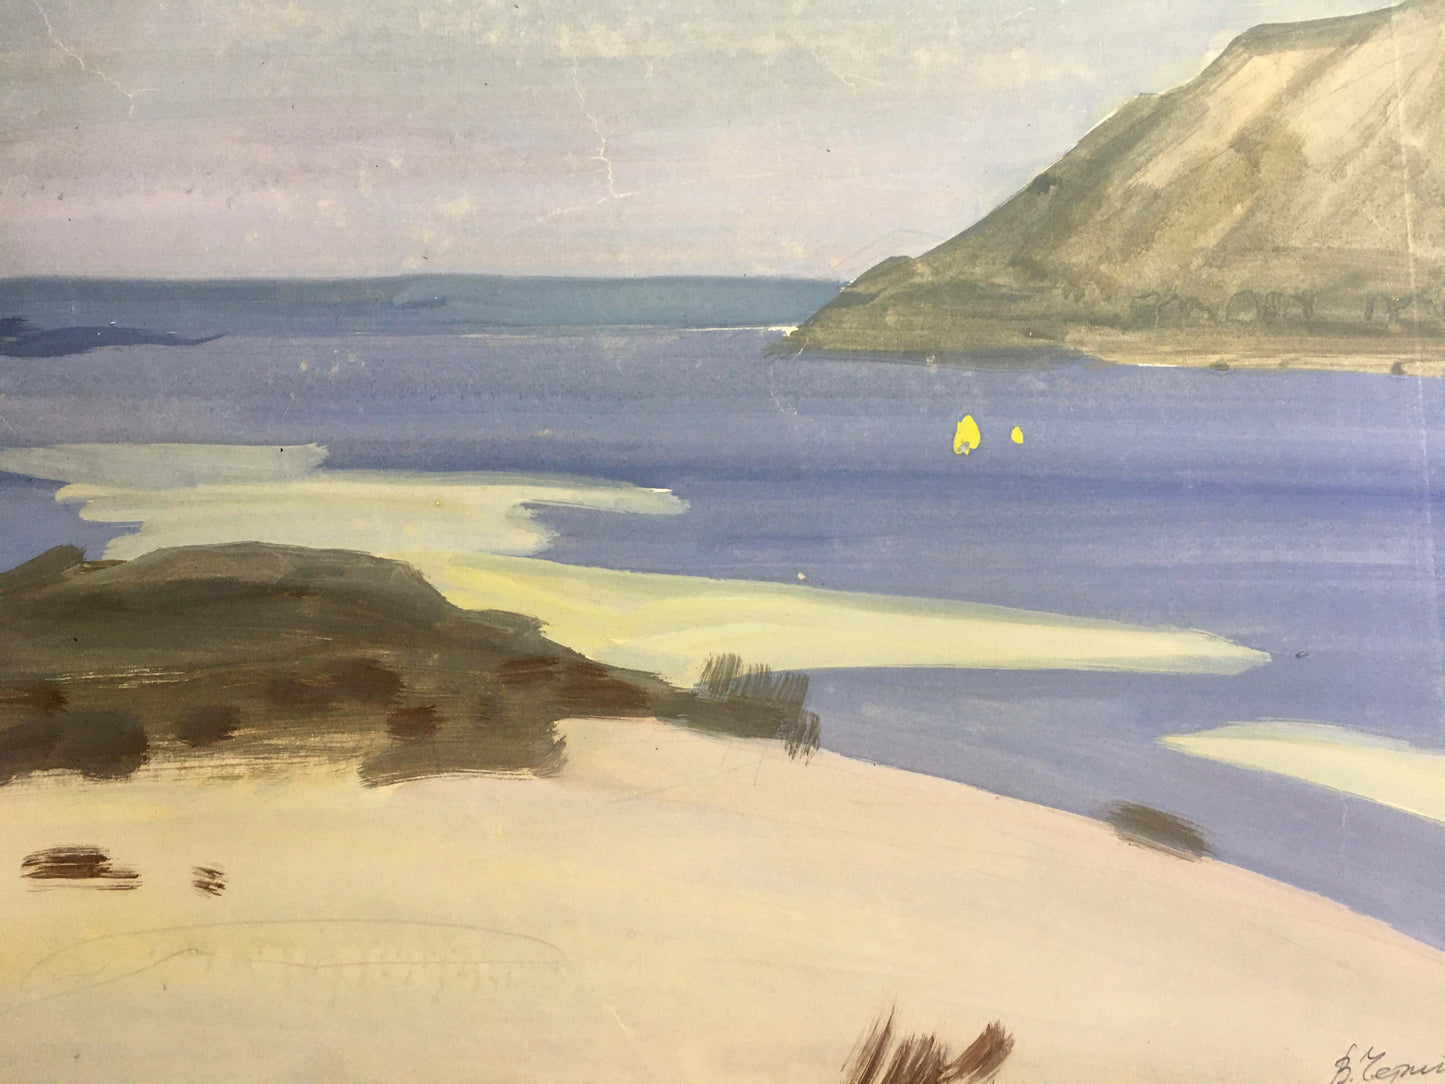 Vladimir Chernikov's Gouache Art: An Ode to Coastal Beauty in "On the Shore"